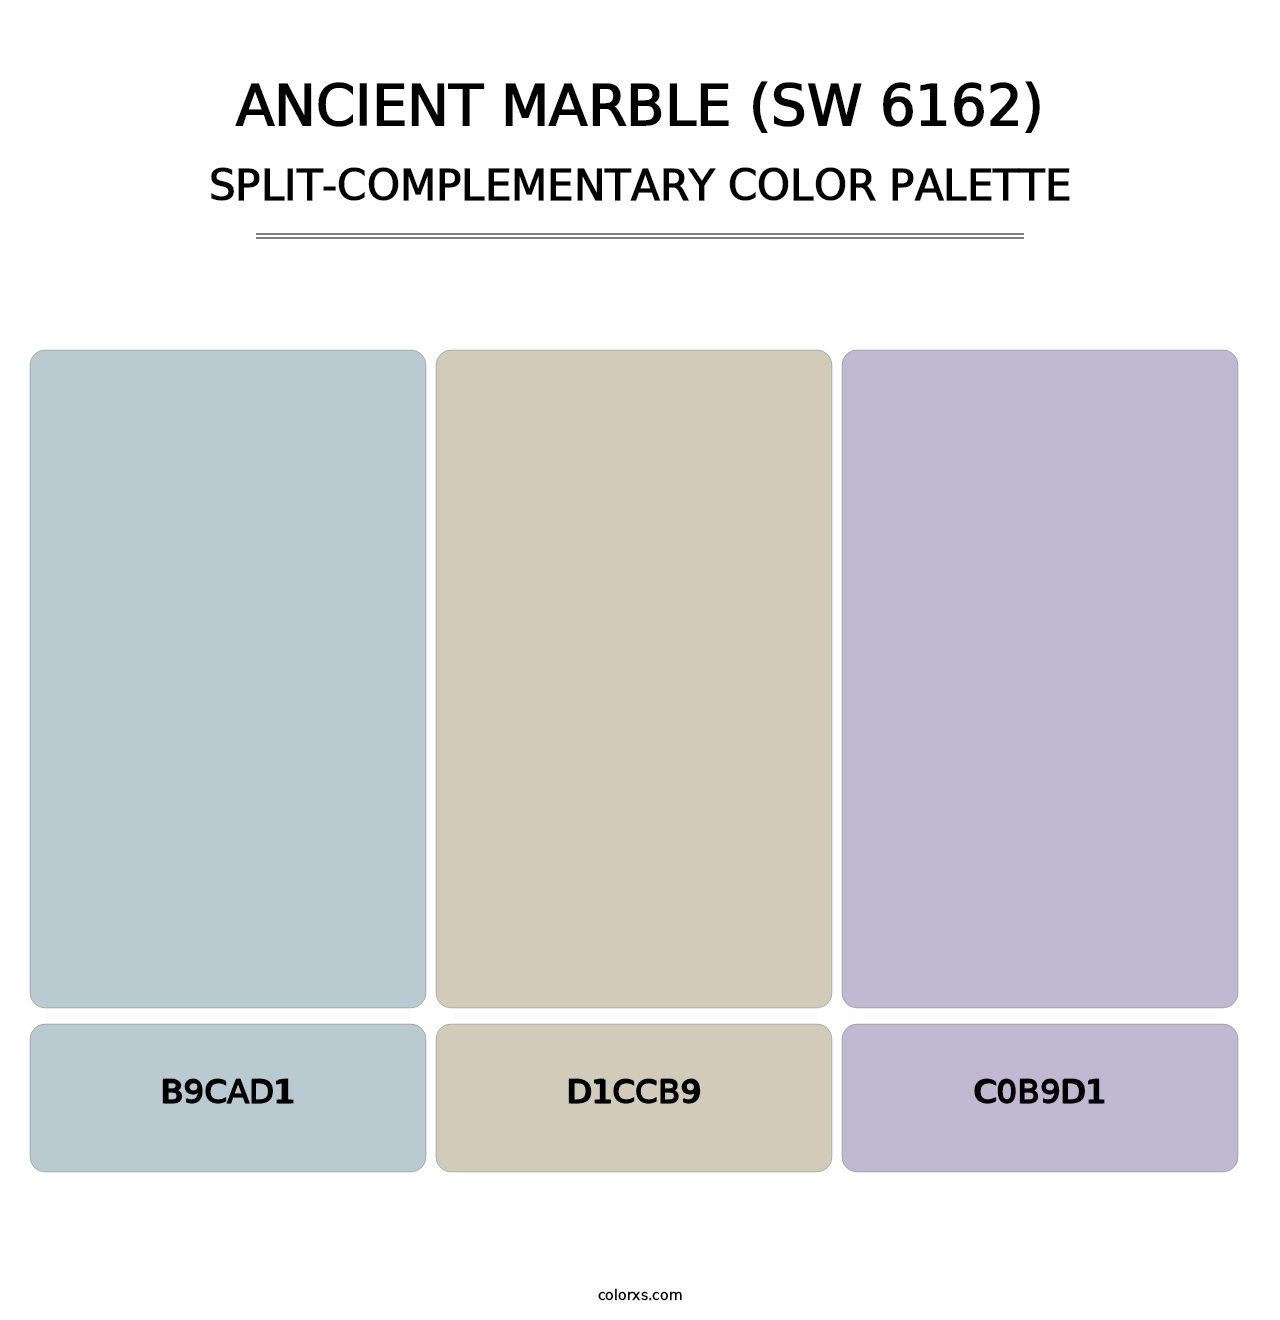 Ancient Marble (SW 6162) - Split-Complementary Color Palette